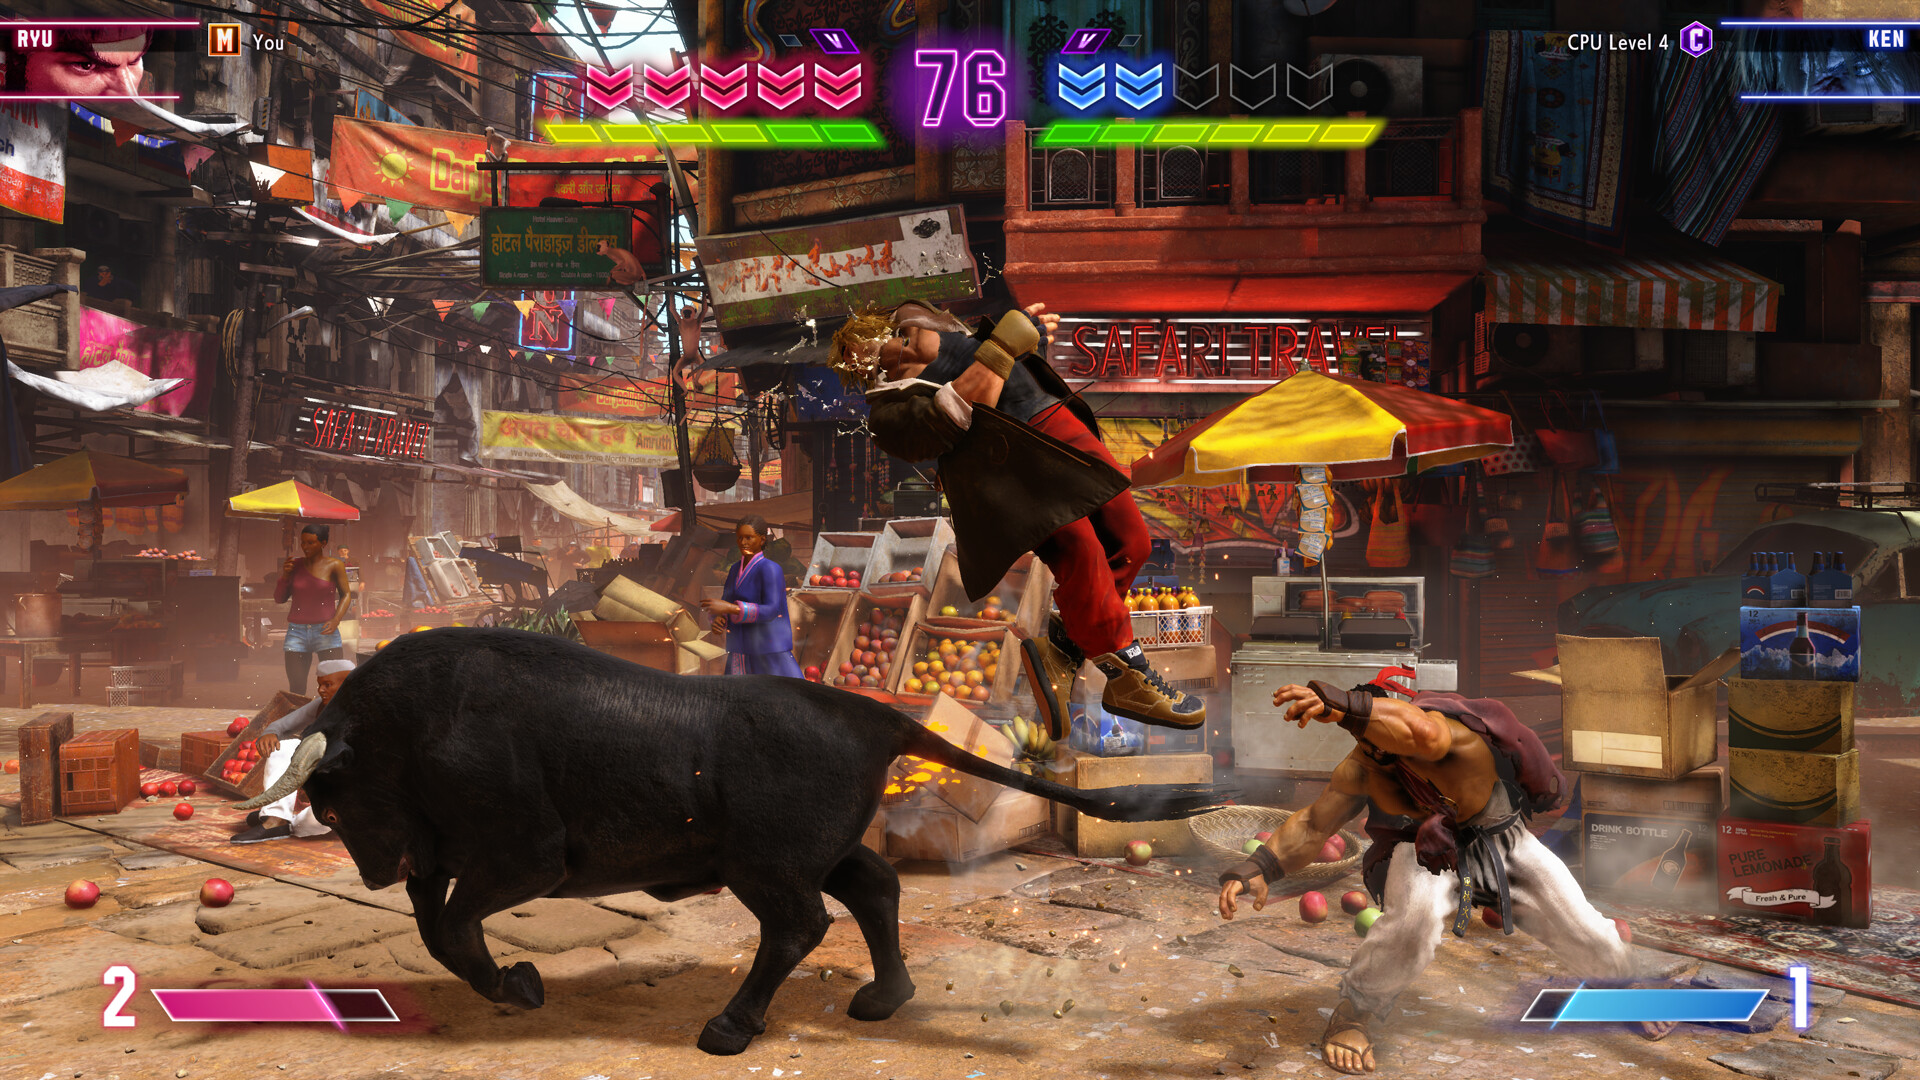 Save 34% on Street Fighter™ 6 on Steam